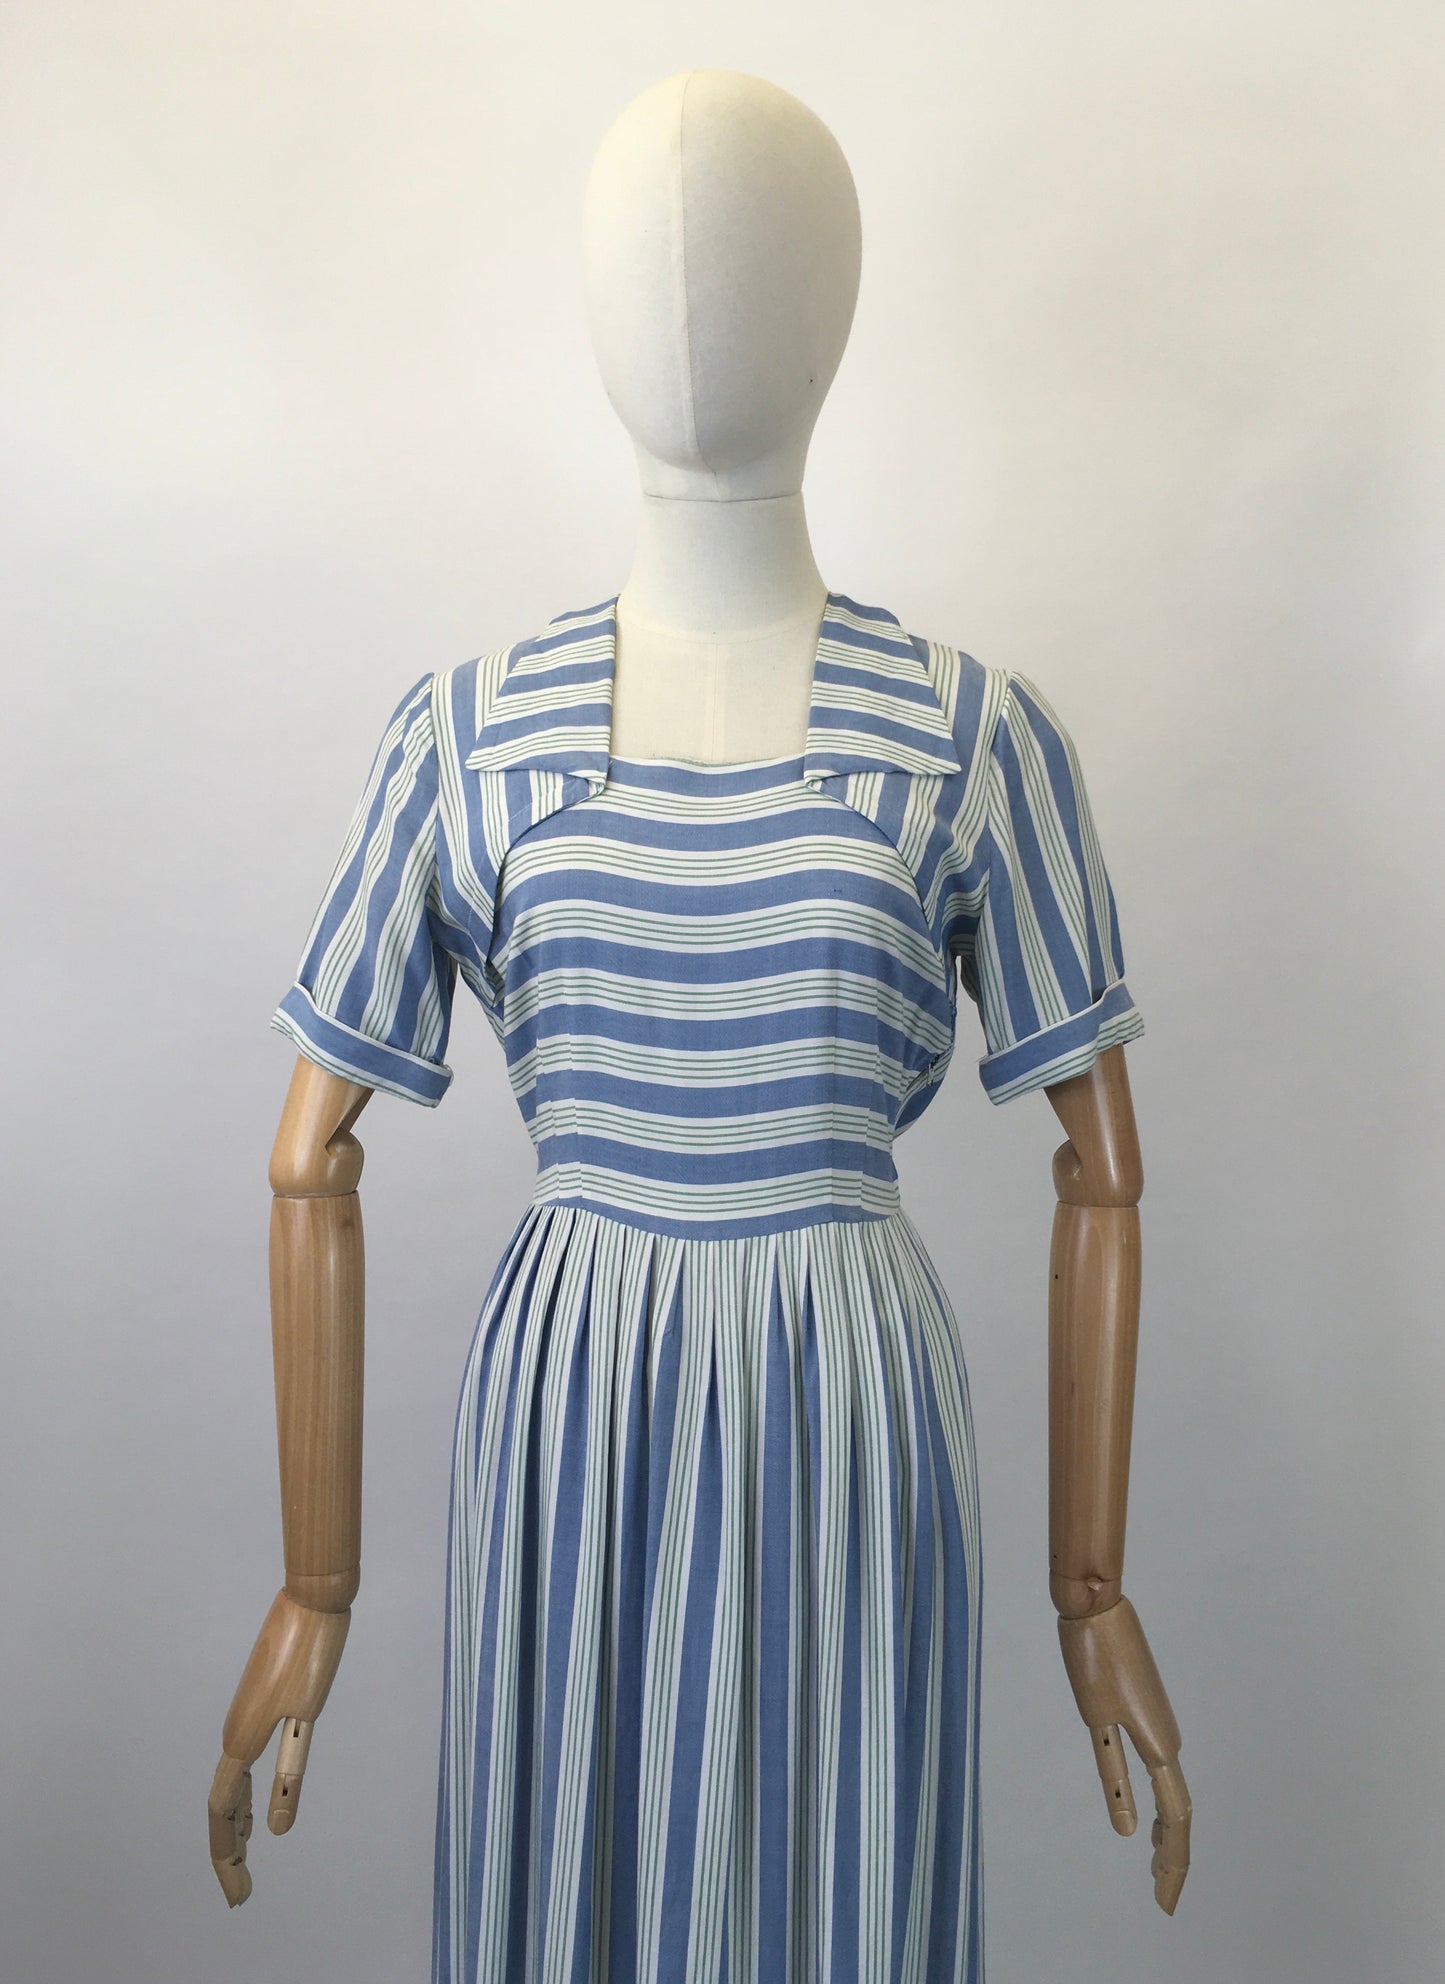 Original 1950s cute cotton day dress - striped in cornflower blue, white, green